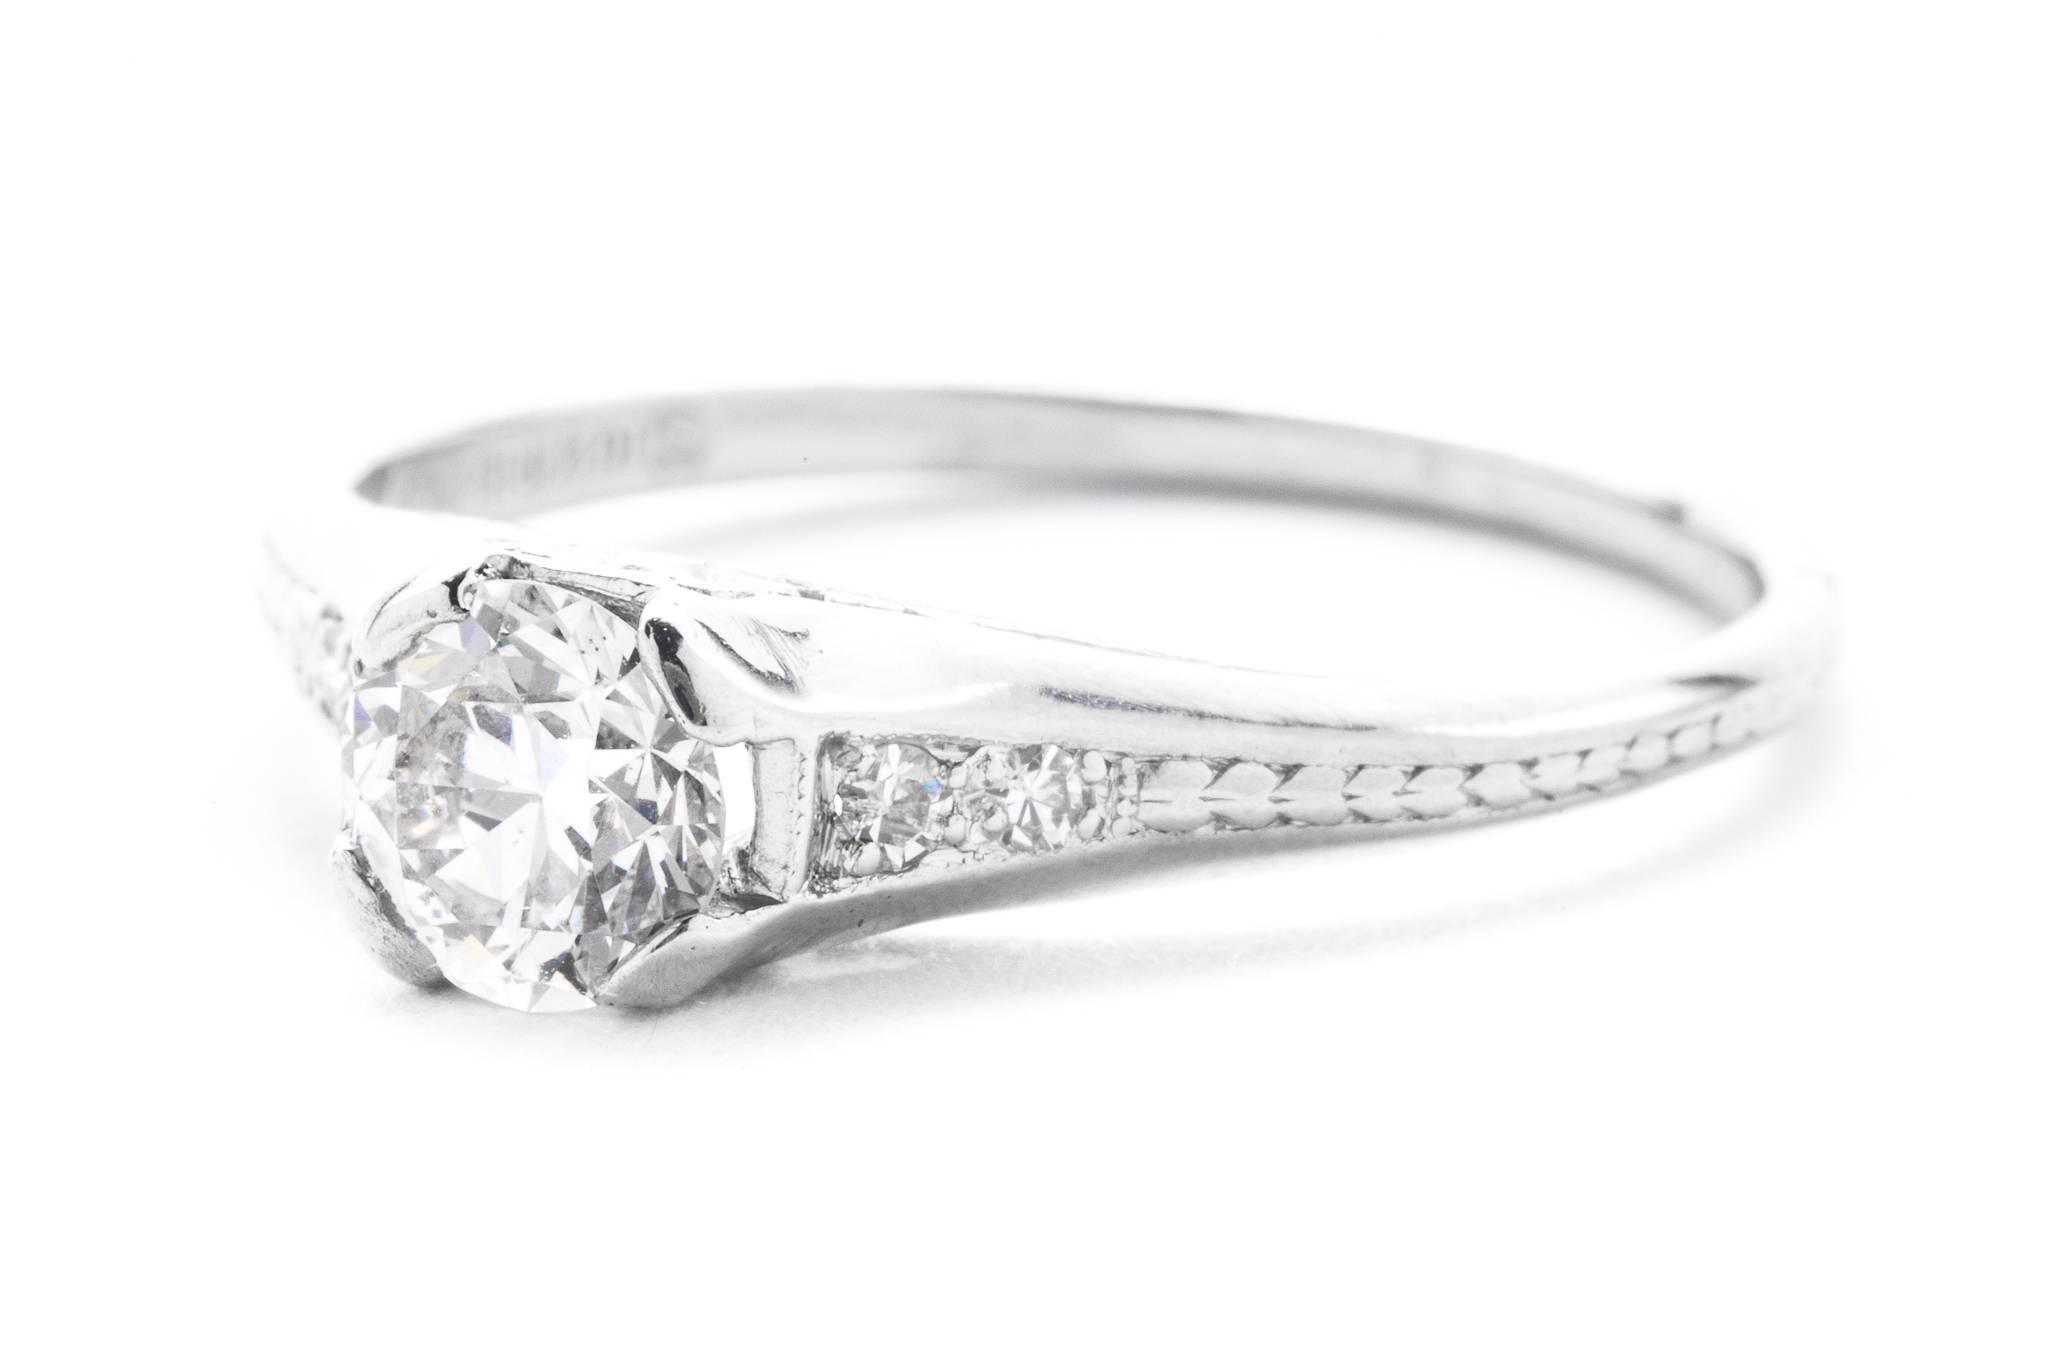 Old European Cut Art Deco Hand Engraved 0.70 Carat Diamond Engagement Ring in Platinum For Sale